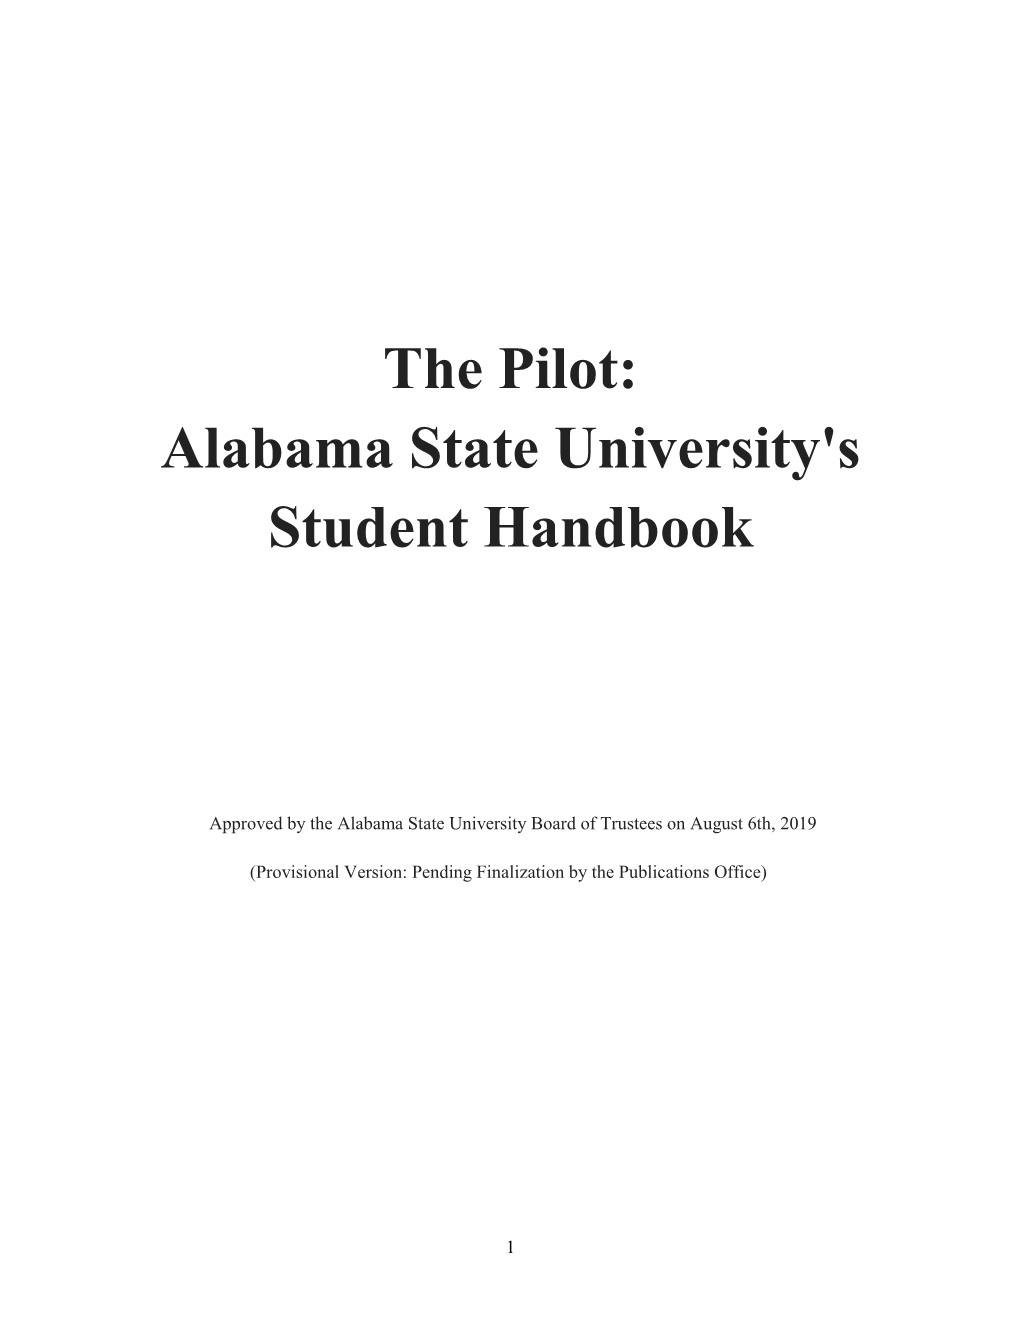 The Pilot: Alabama State University's Student Handbook